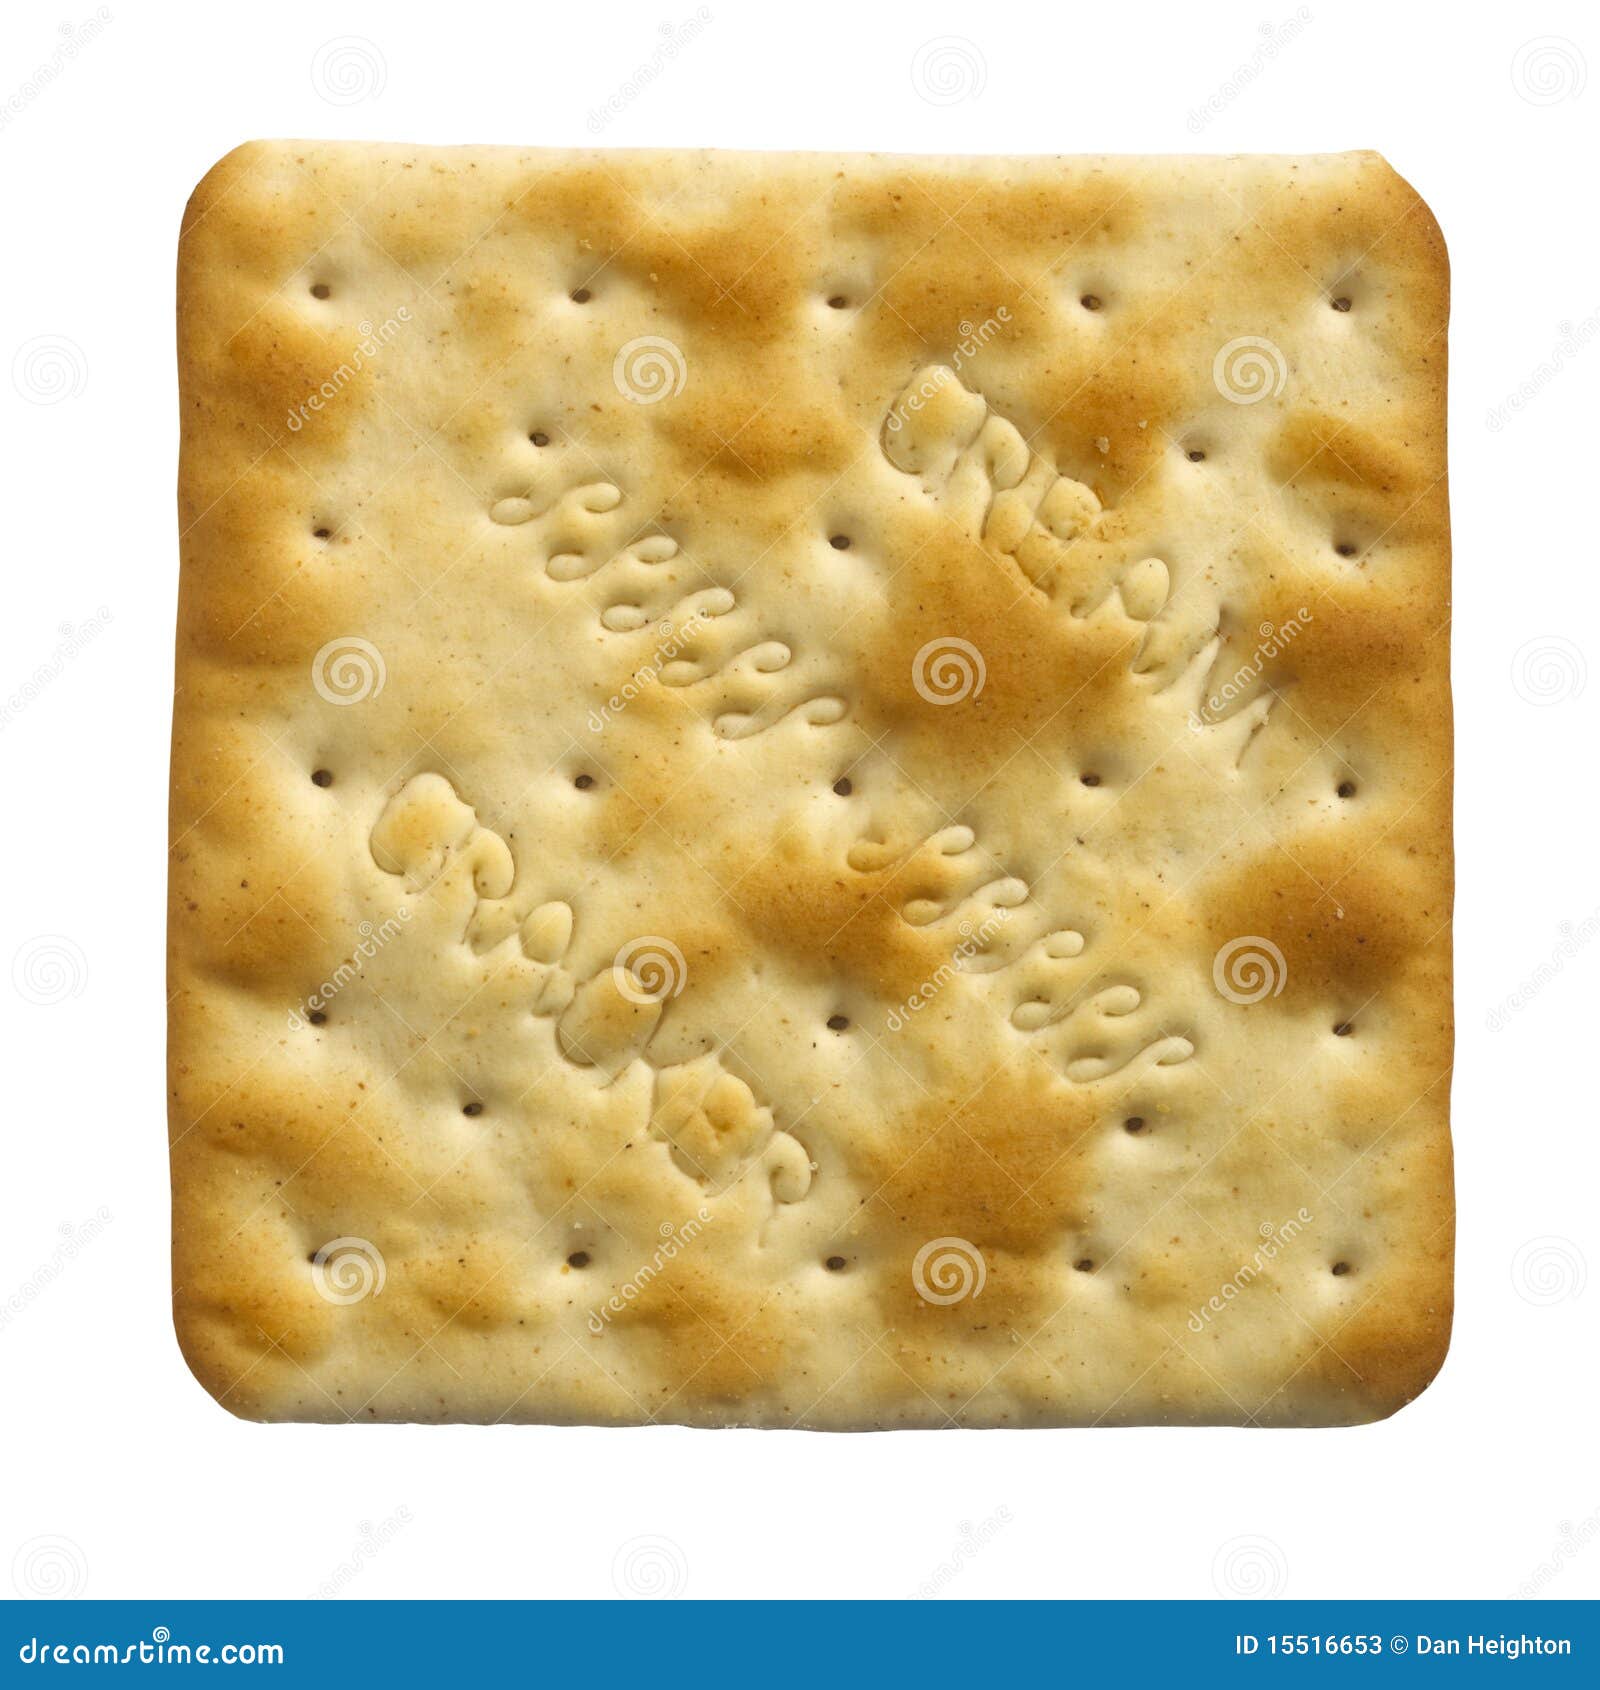 single cream cracker biscuit on white background